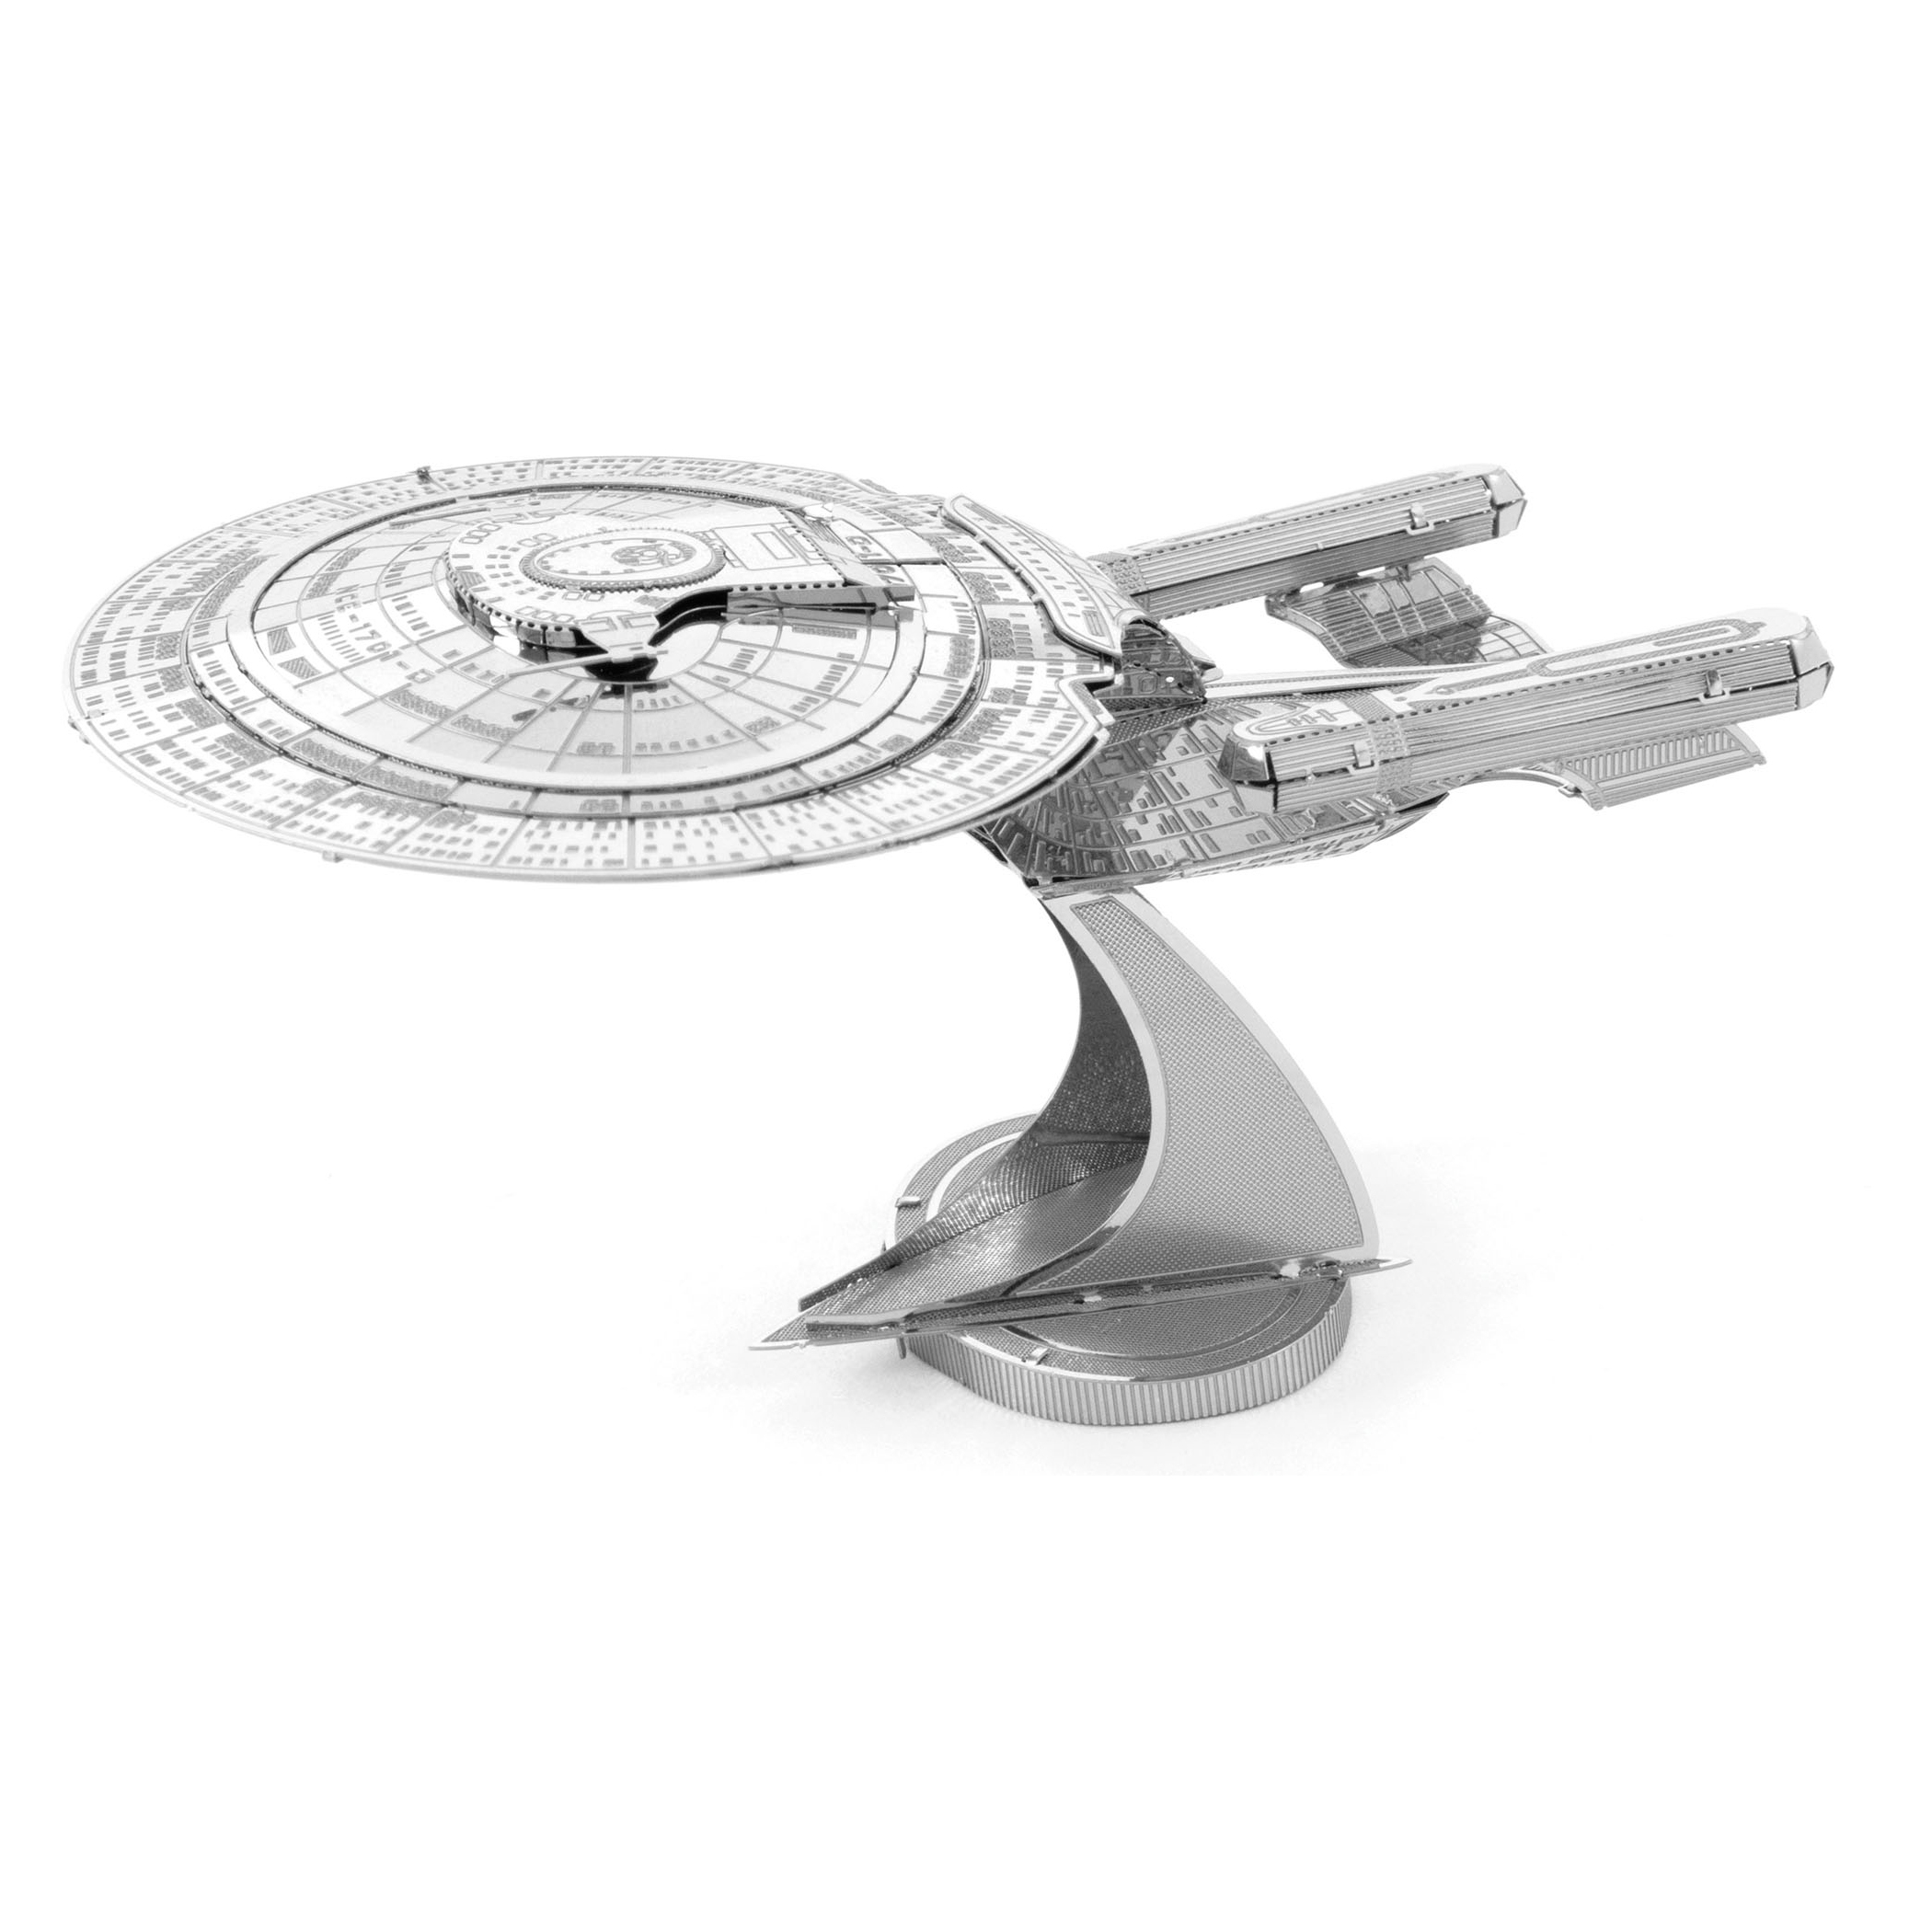 Fascinations Toys & Gifts Metal Earth 3D Laser Cut Model - Star Trek U.S.S. Enterprise NCC-1701-D